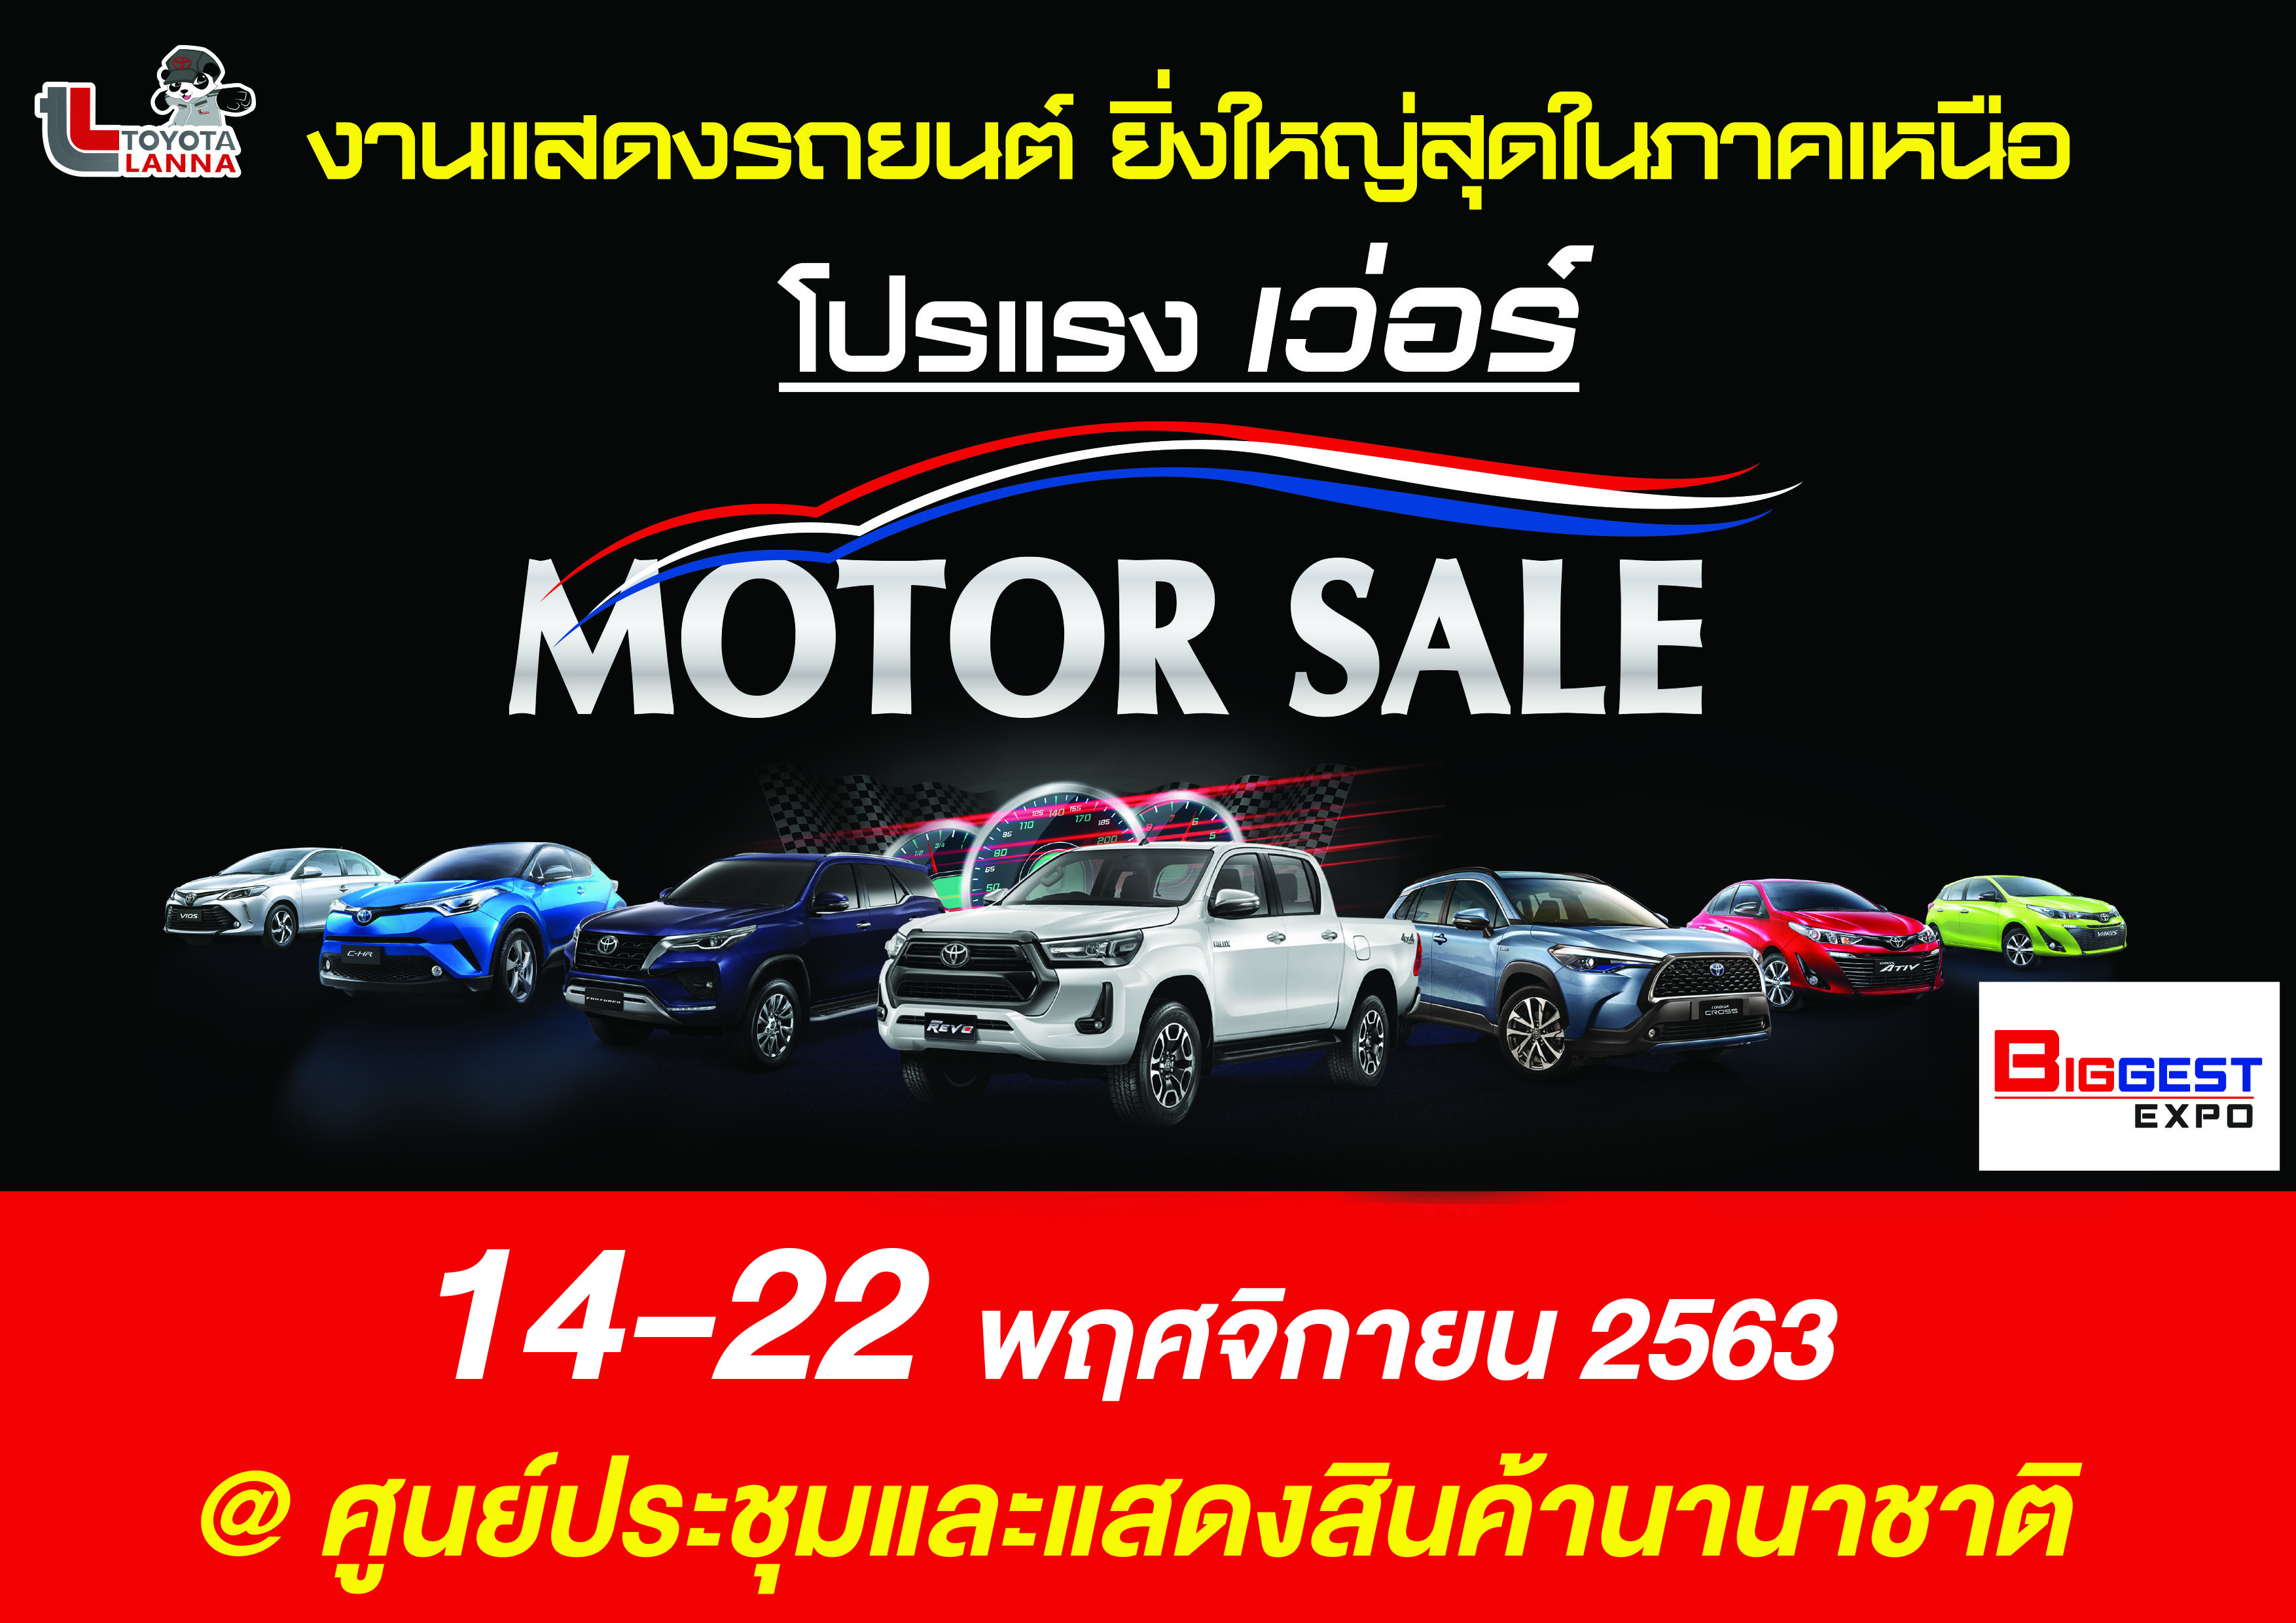 Chiang Mai Motor Sale